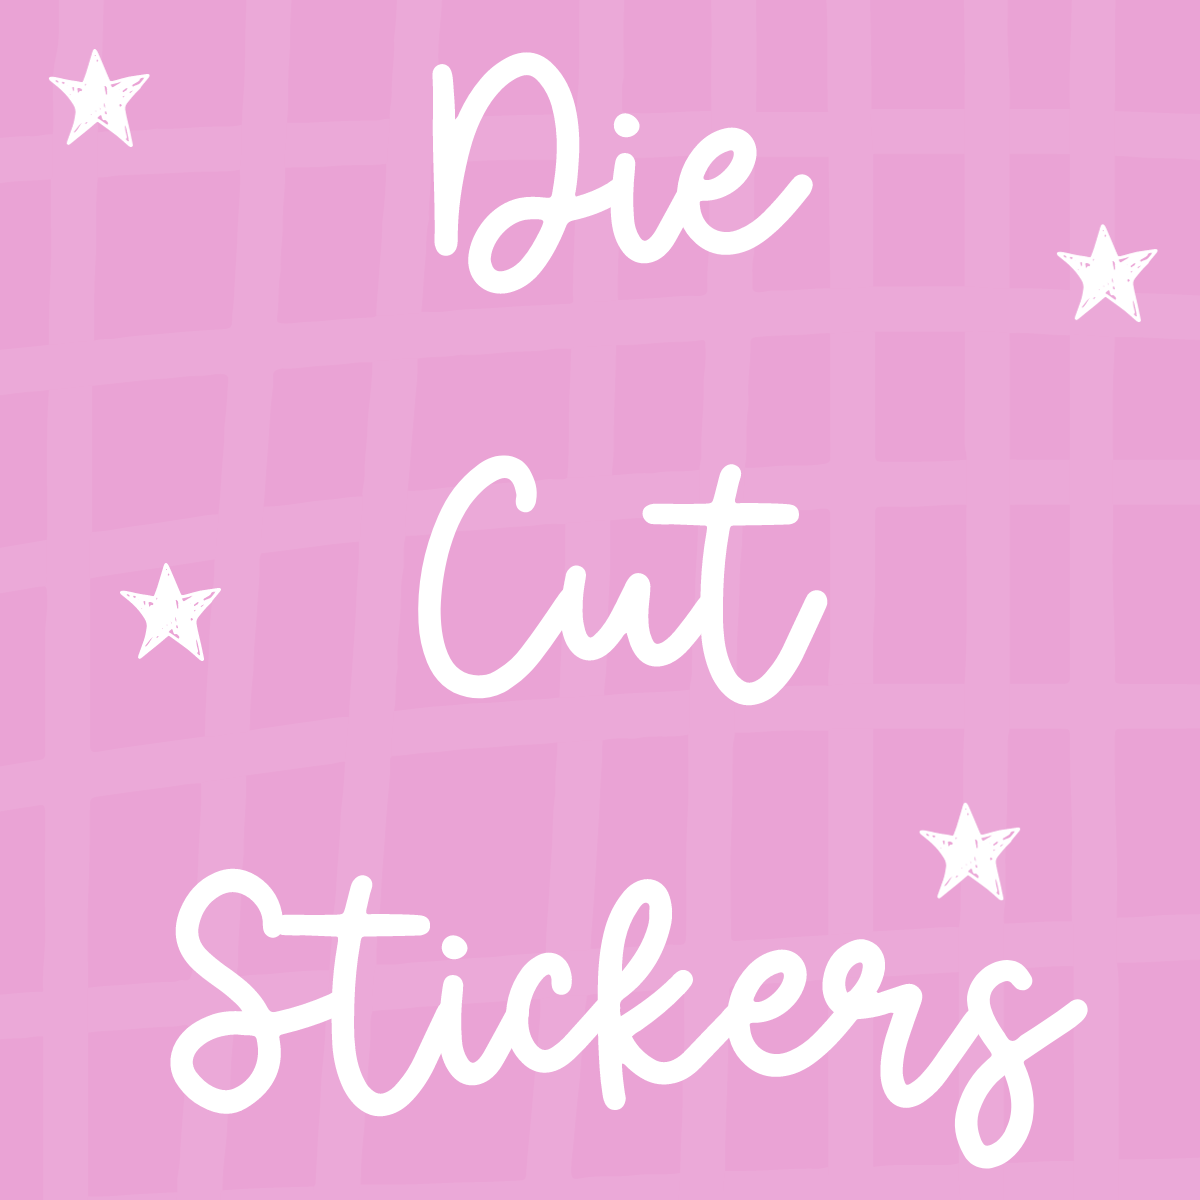 Die cut stickers